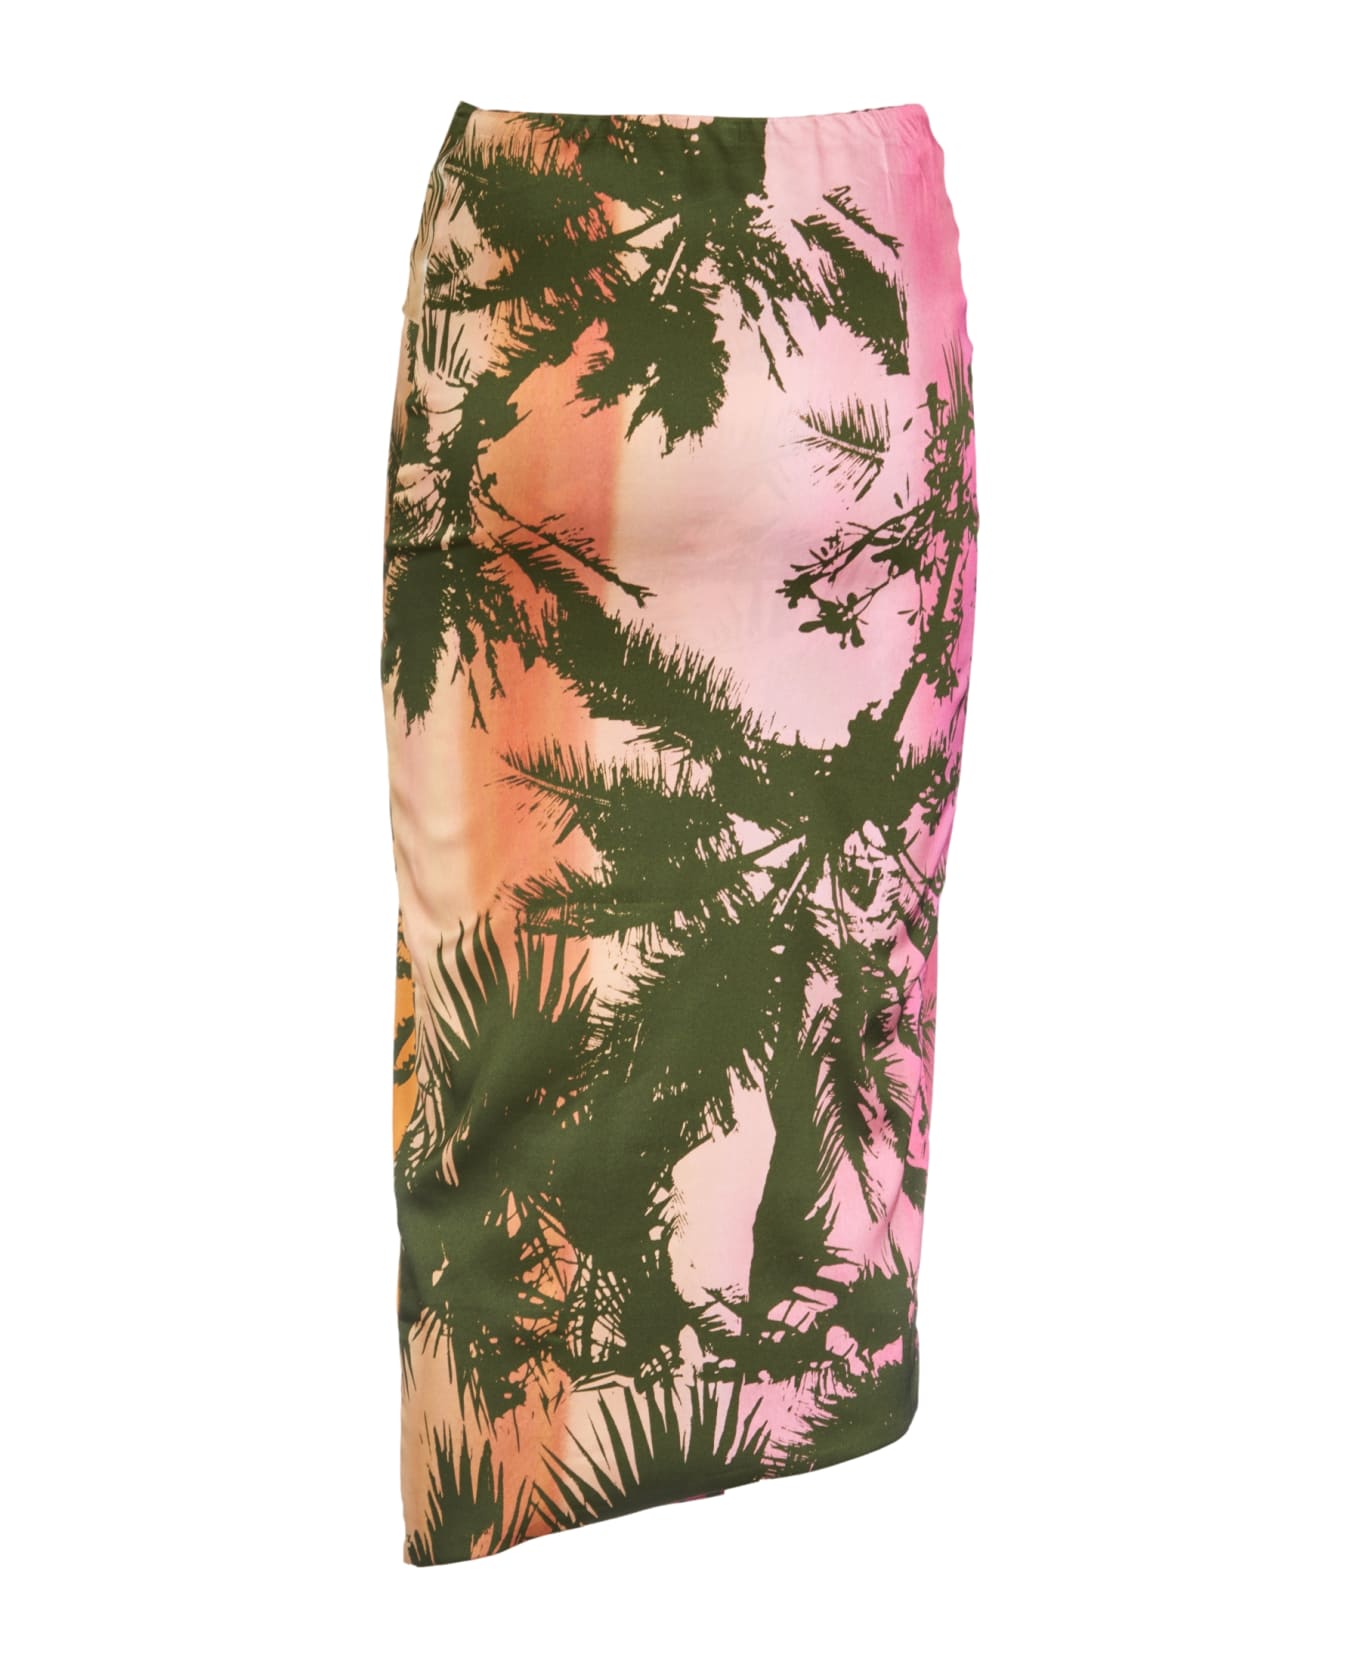 Laneus Draped Tropical Printed Skirt - Variante unica